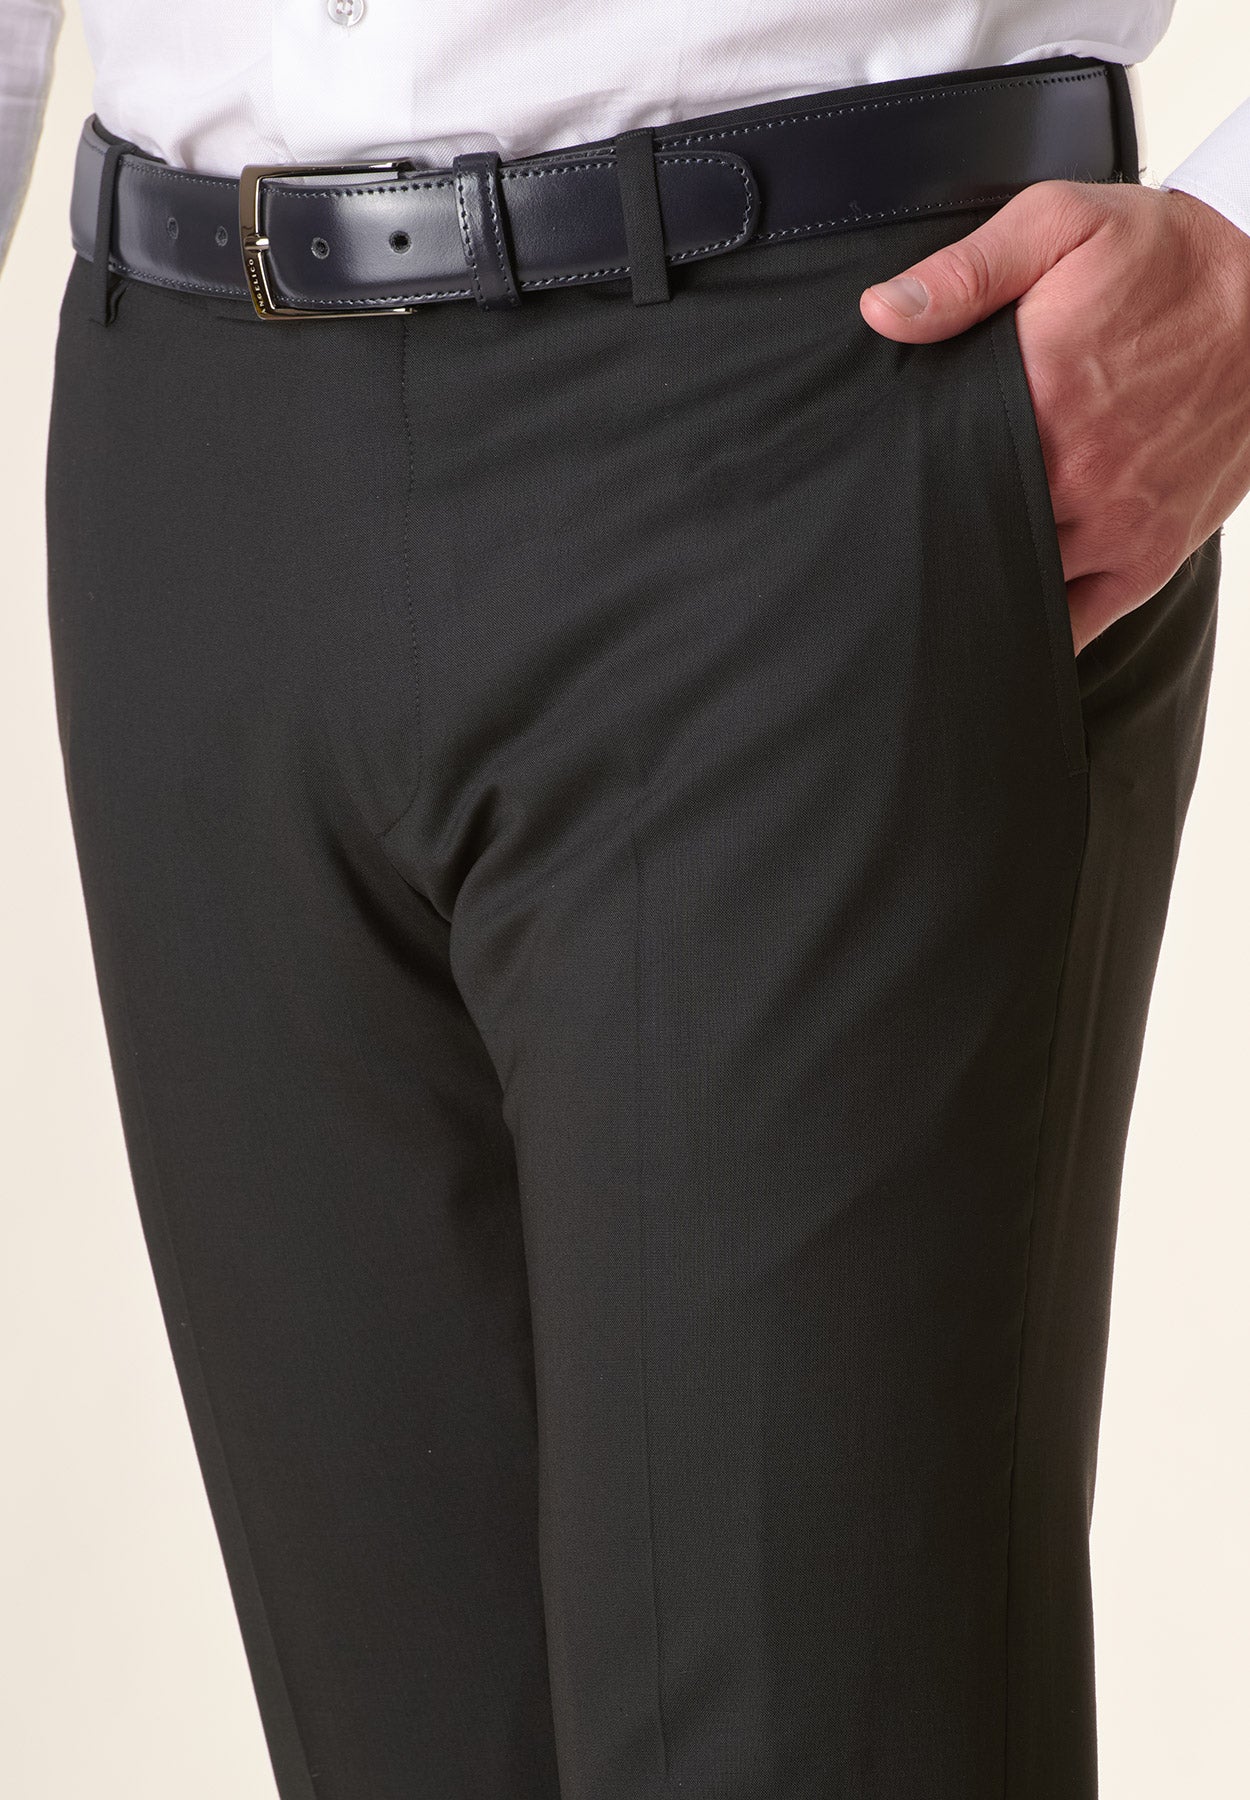 Pantalone nero tela lana stretch custom fit